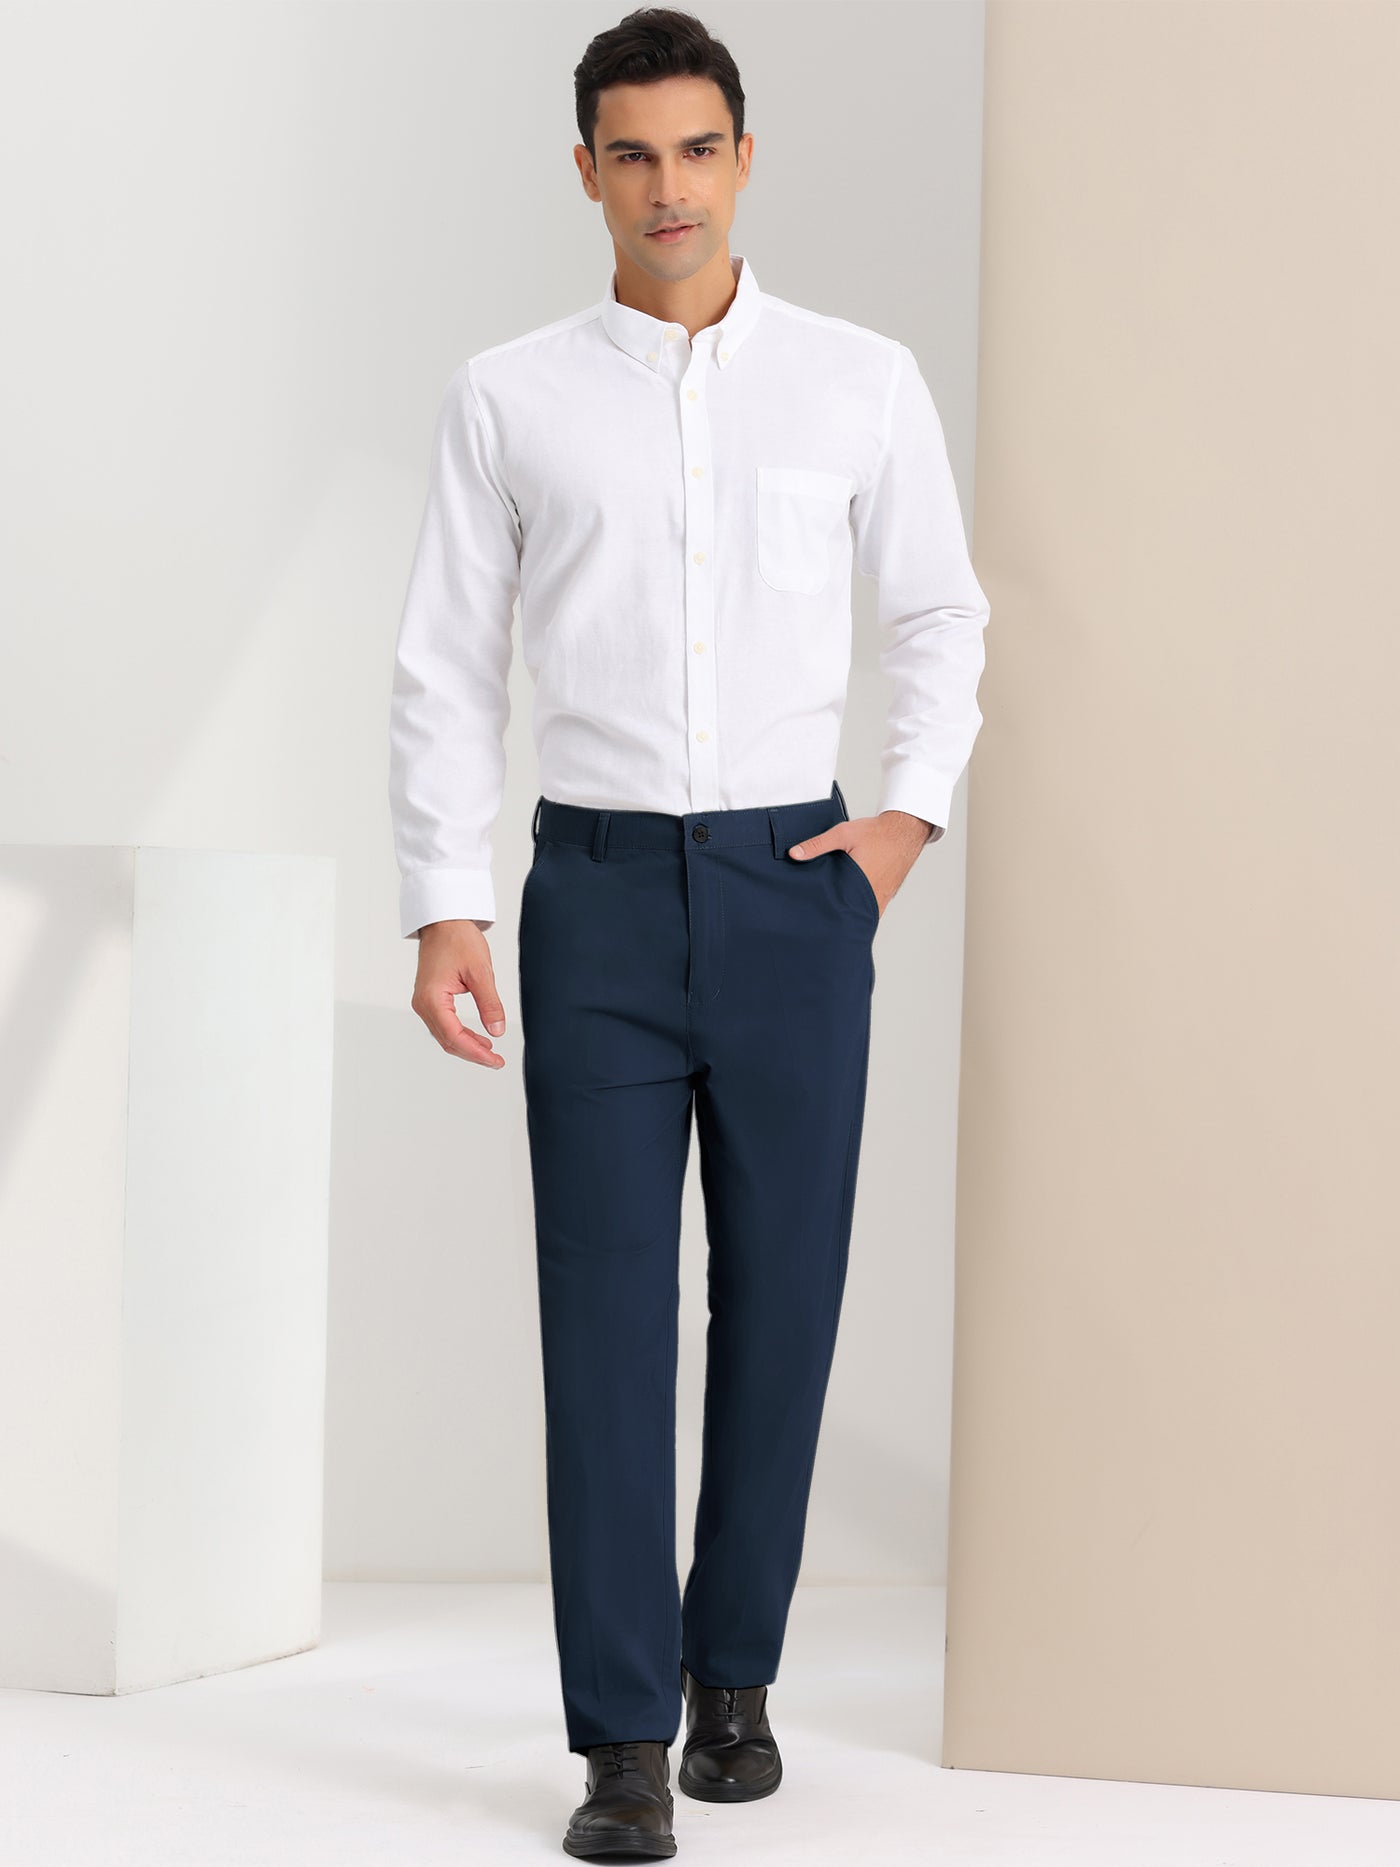 Bublédon Men's Straight Fit Trousers Stretch Flat Front Business Office Dress Pants